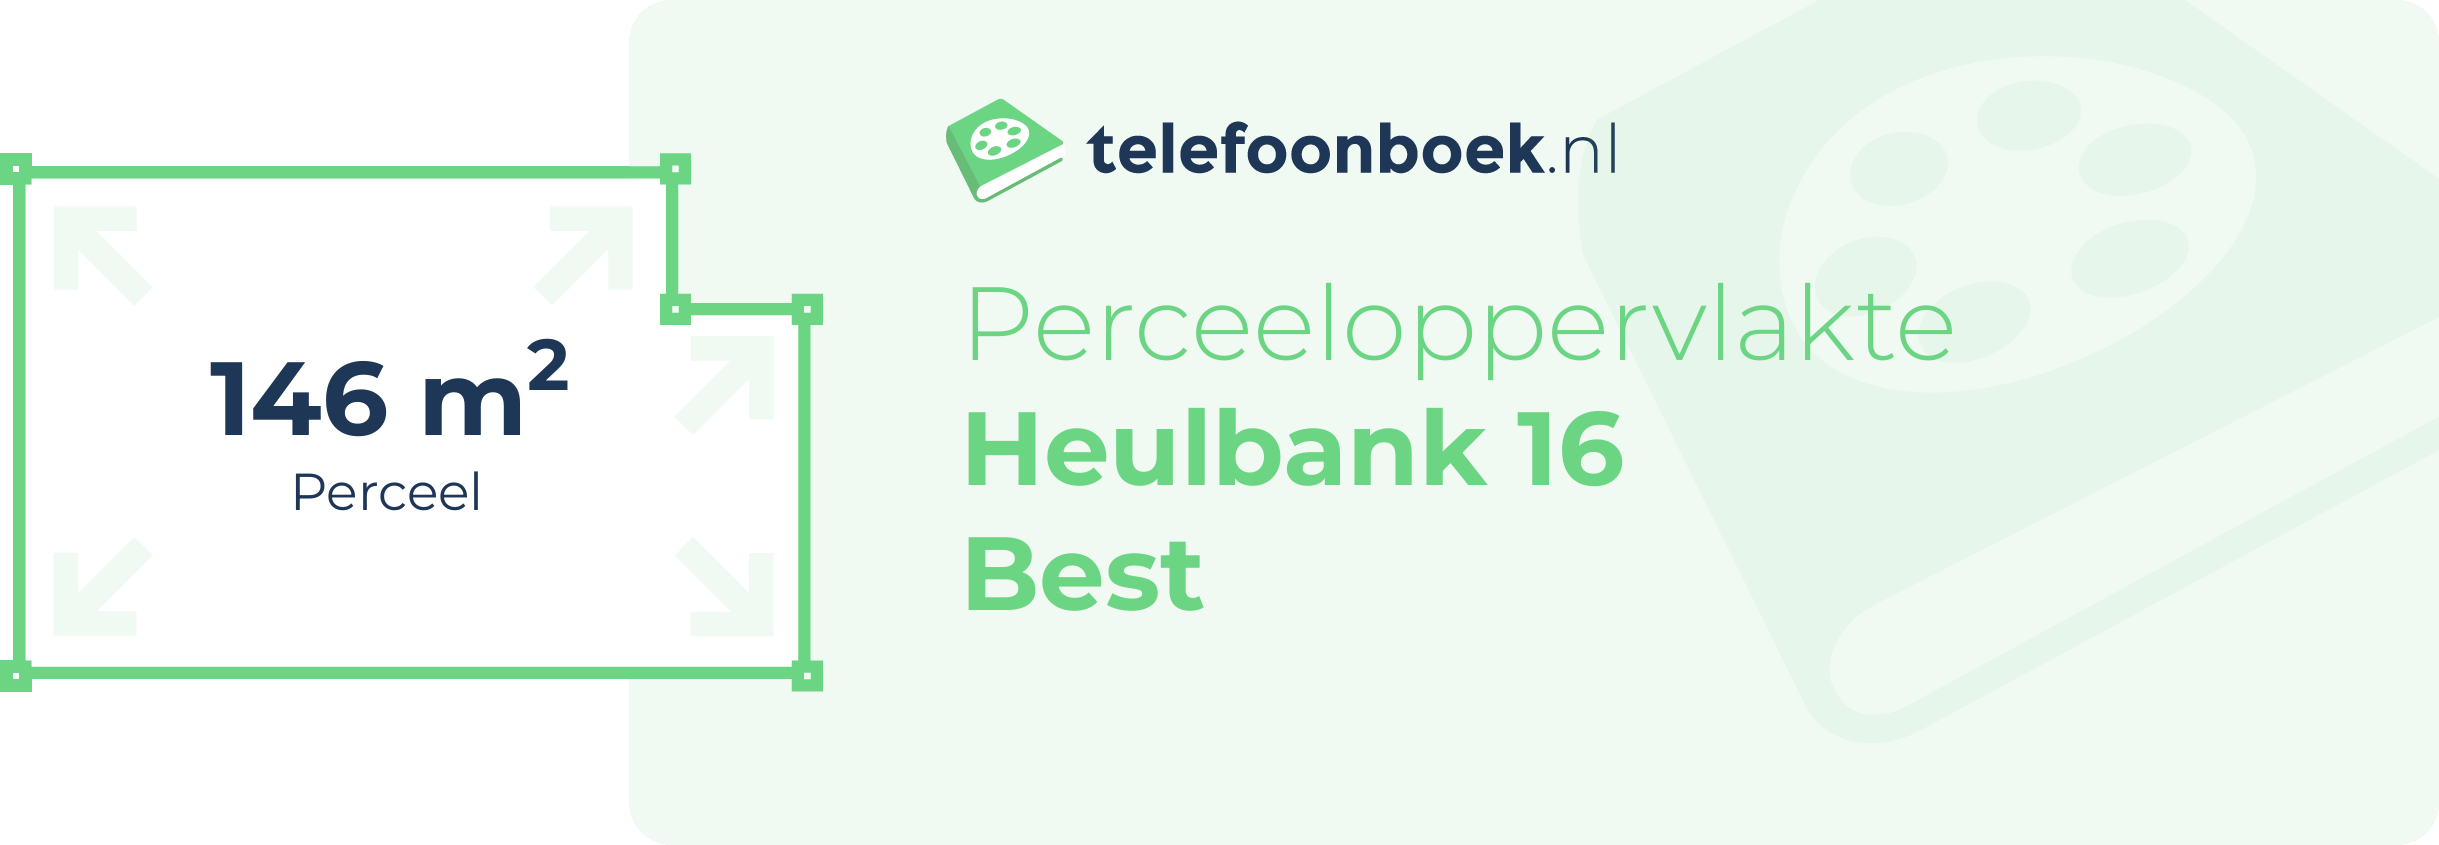 Perceeloppervlakte Heulbank 16 Best